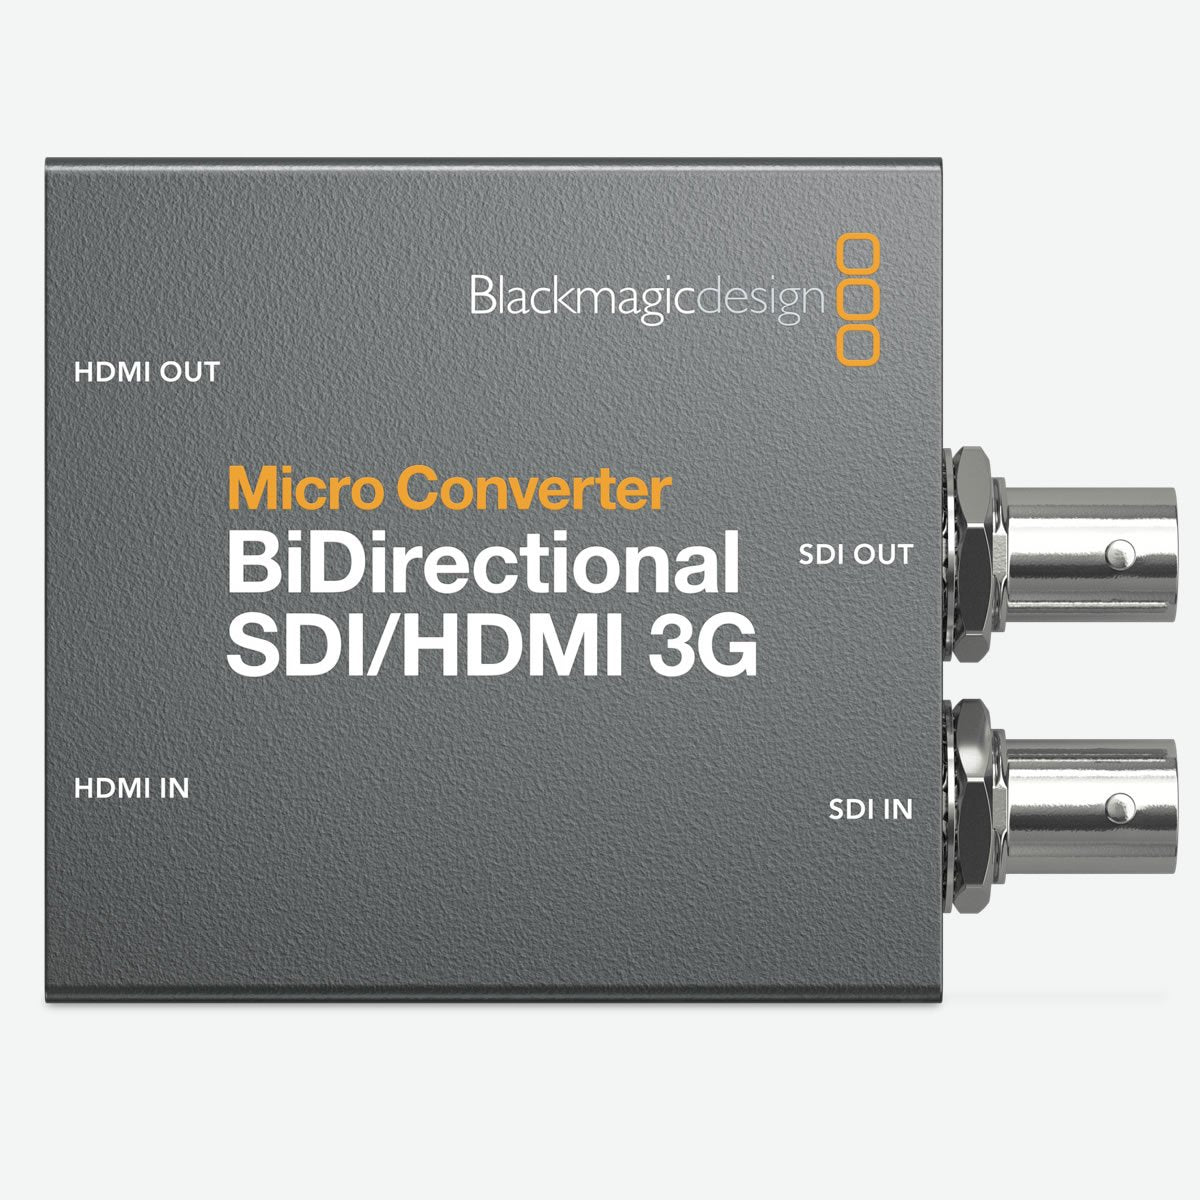 Blackmagic Design(ブラックマジックデザイン) コンバーター(ACアダプター付) Micro Converter BiDirectional SDI/HDMI 3G wPSU CONVBDC/SDI/HDMI03G/P